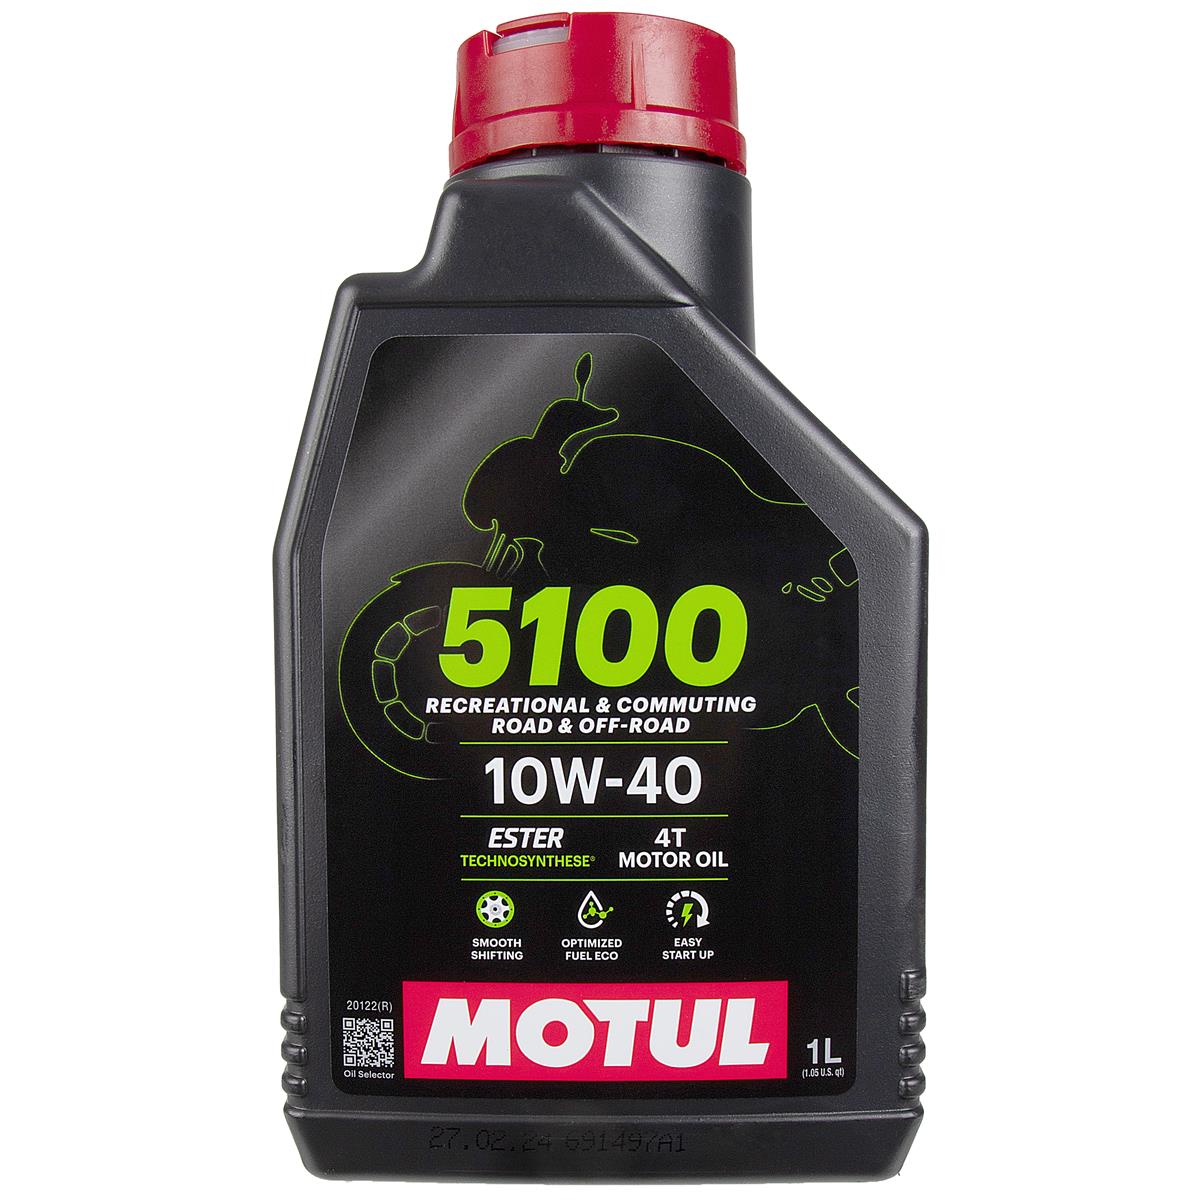 Motul Engine Oil 5100 4T 10W40, 1 Liter